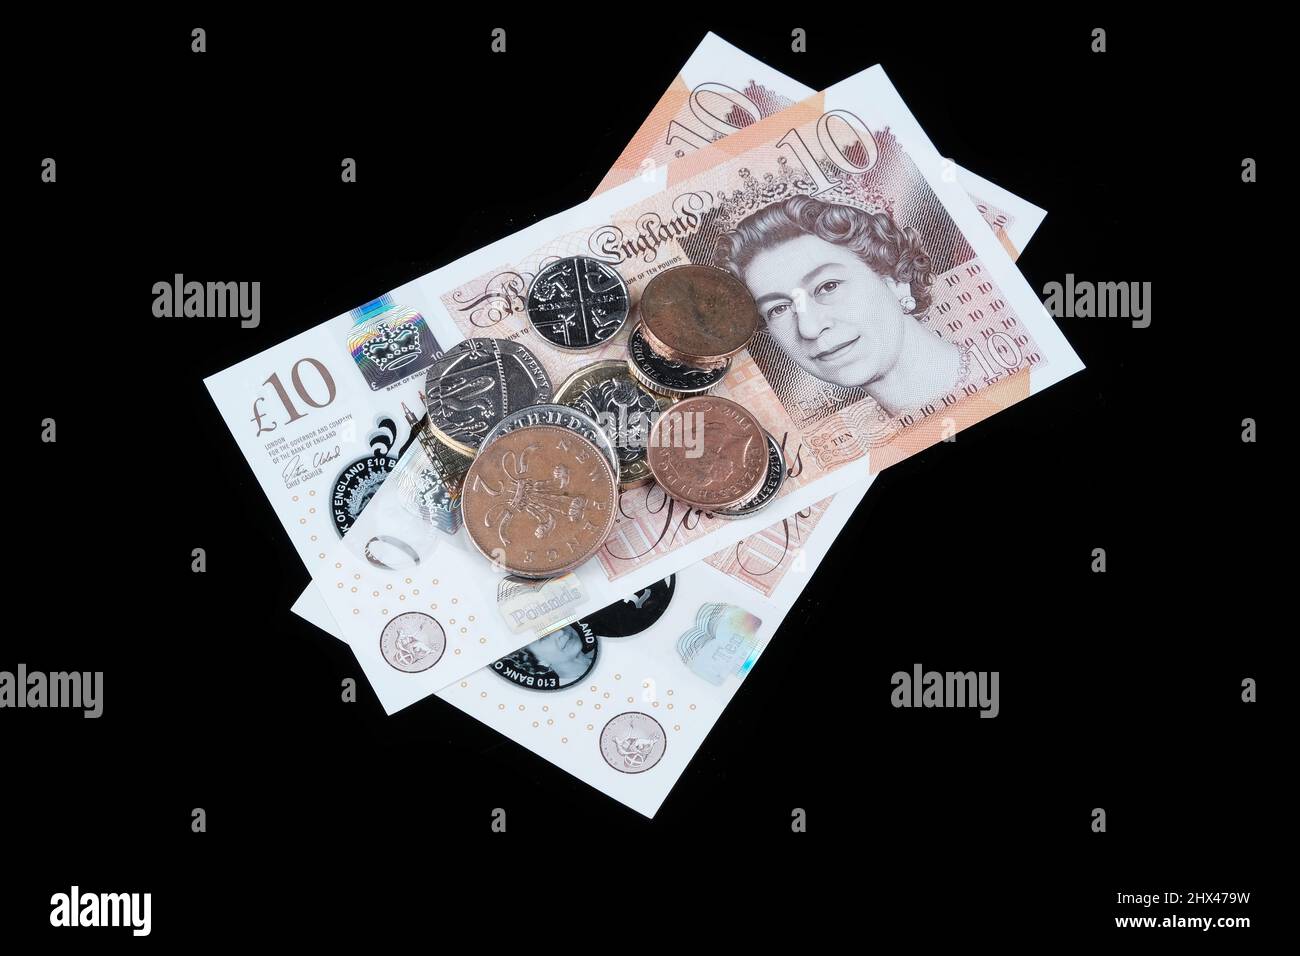 British Money (Cash) on Black Background Stock Photo